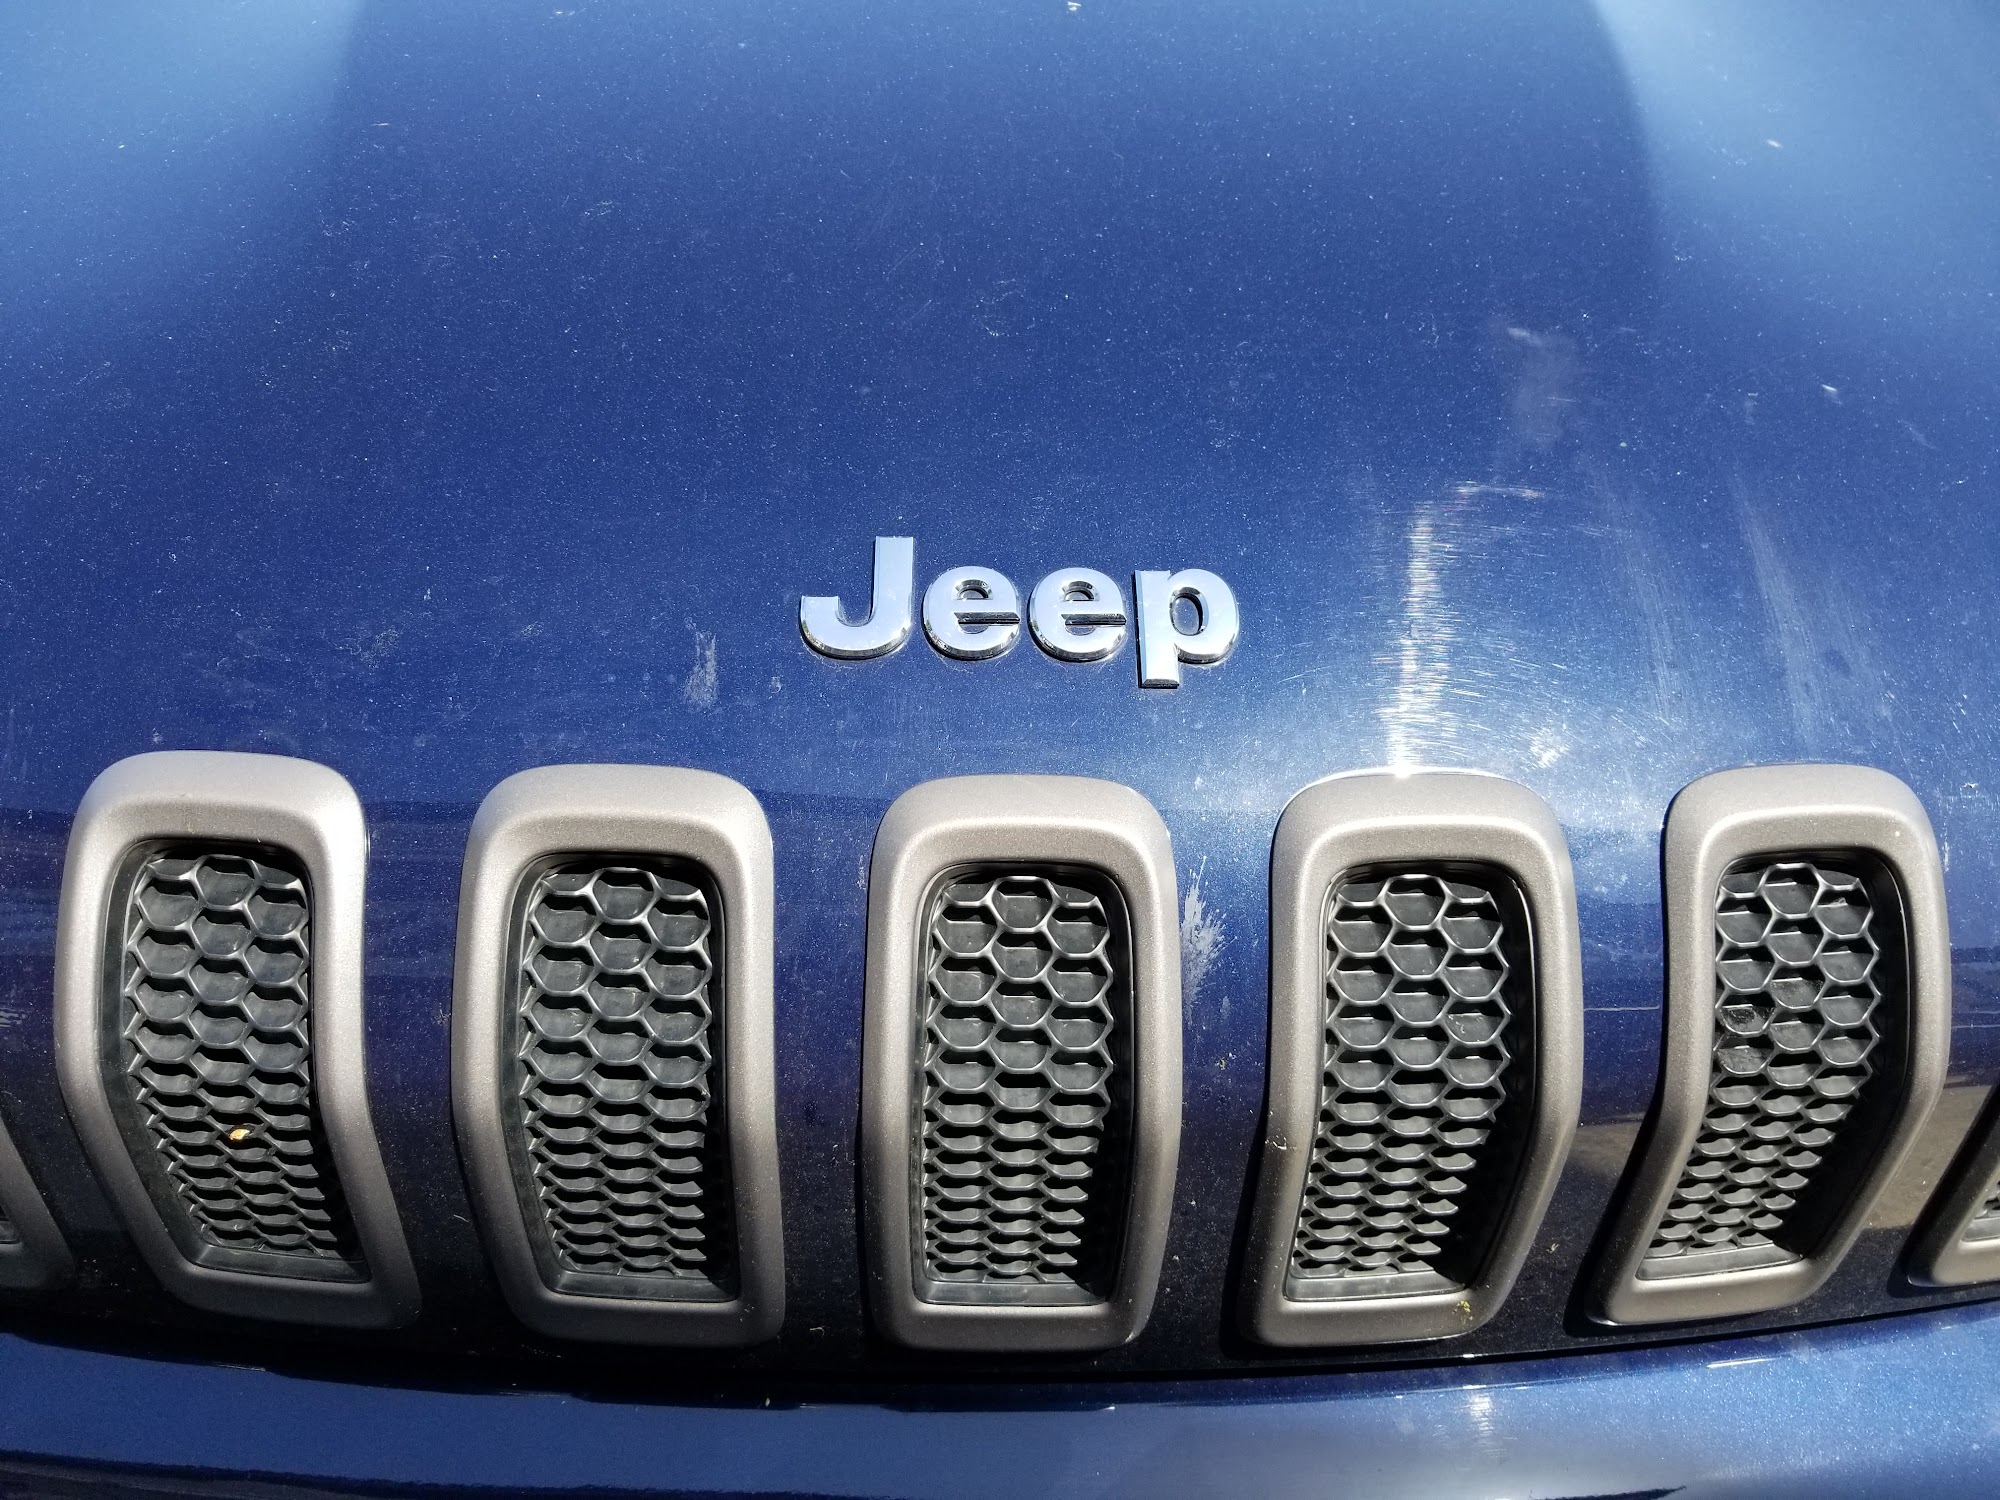 Outer Banks Chrysler Jeep Dodge Ram